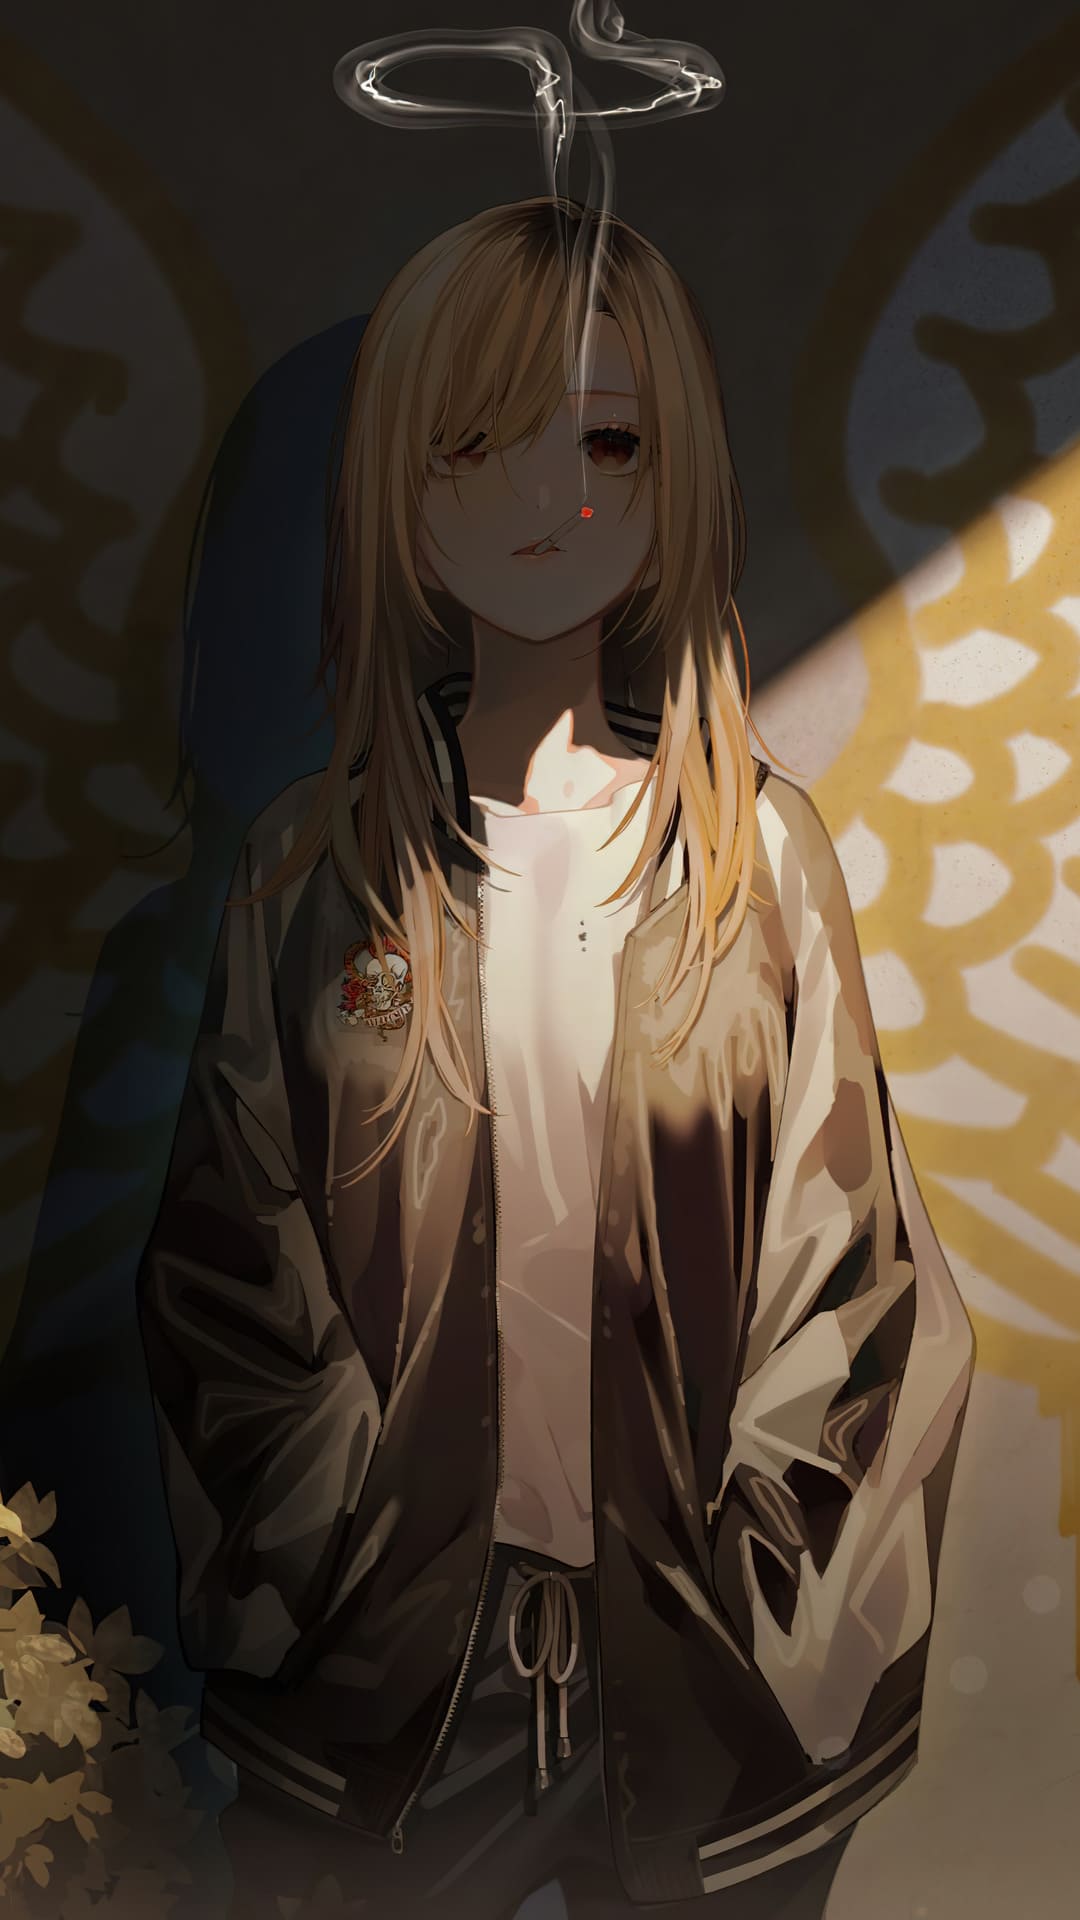 Beautiful Anime Girl in the night 2K wallpaper download